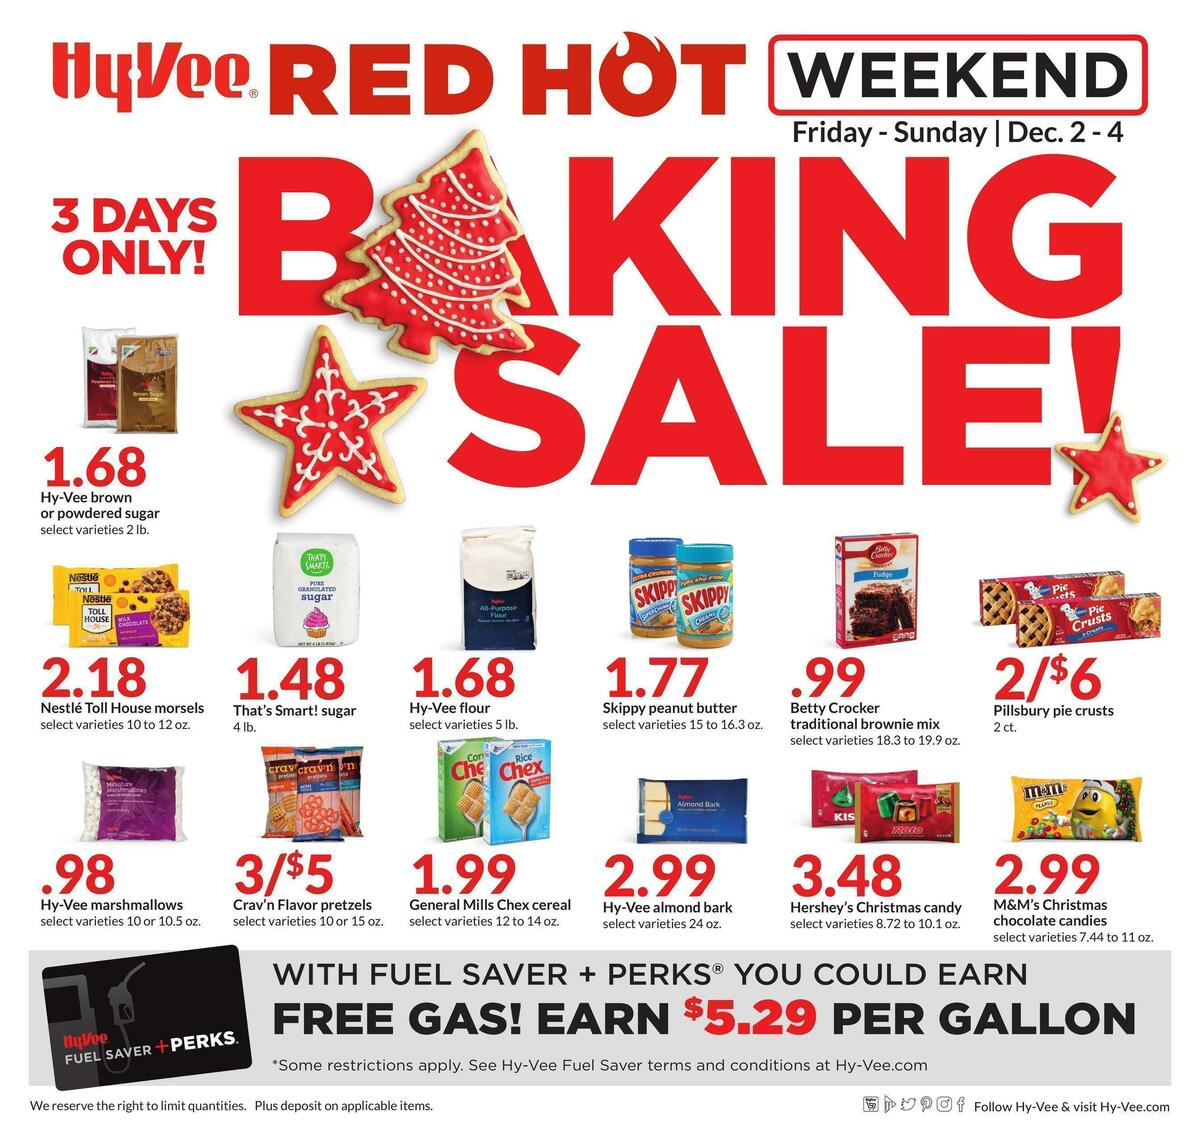 Hy-Vee Red Hot Weekend Weekly Ad from December 2